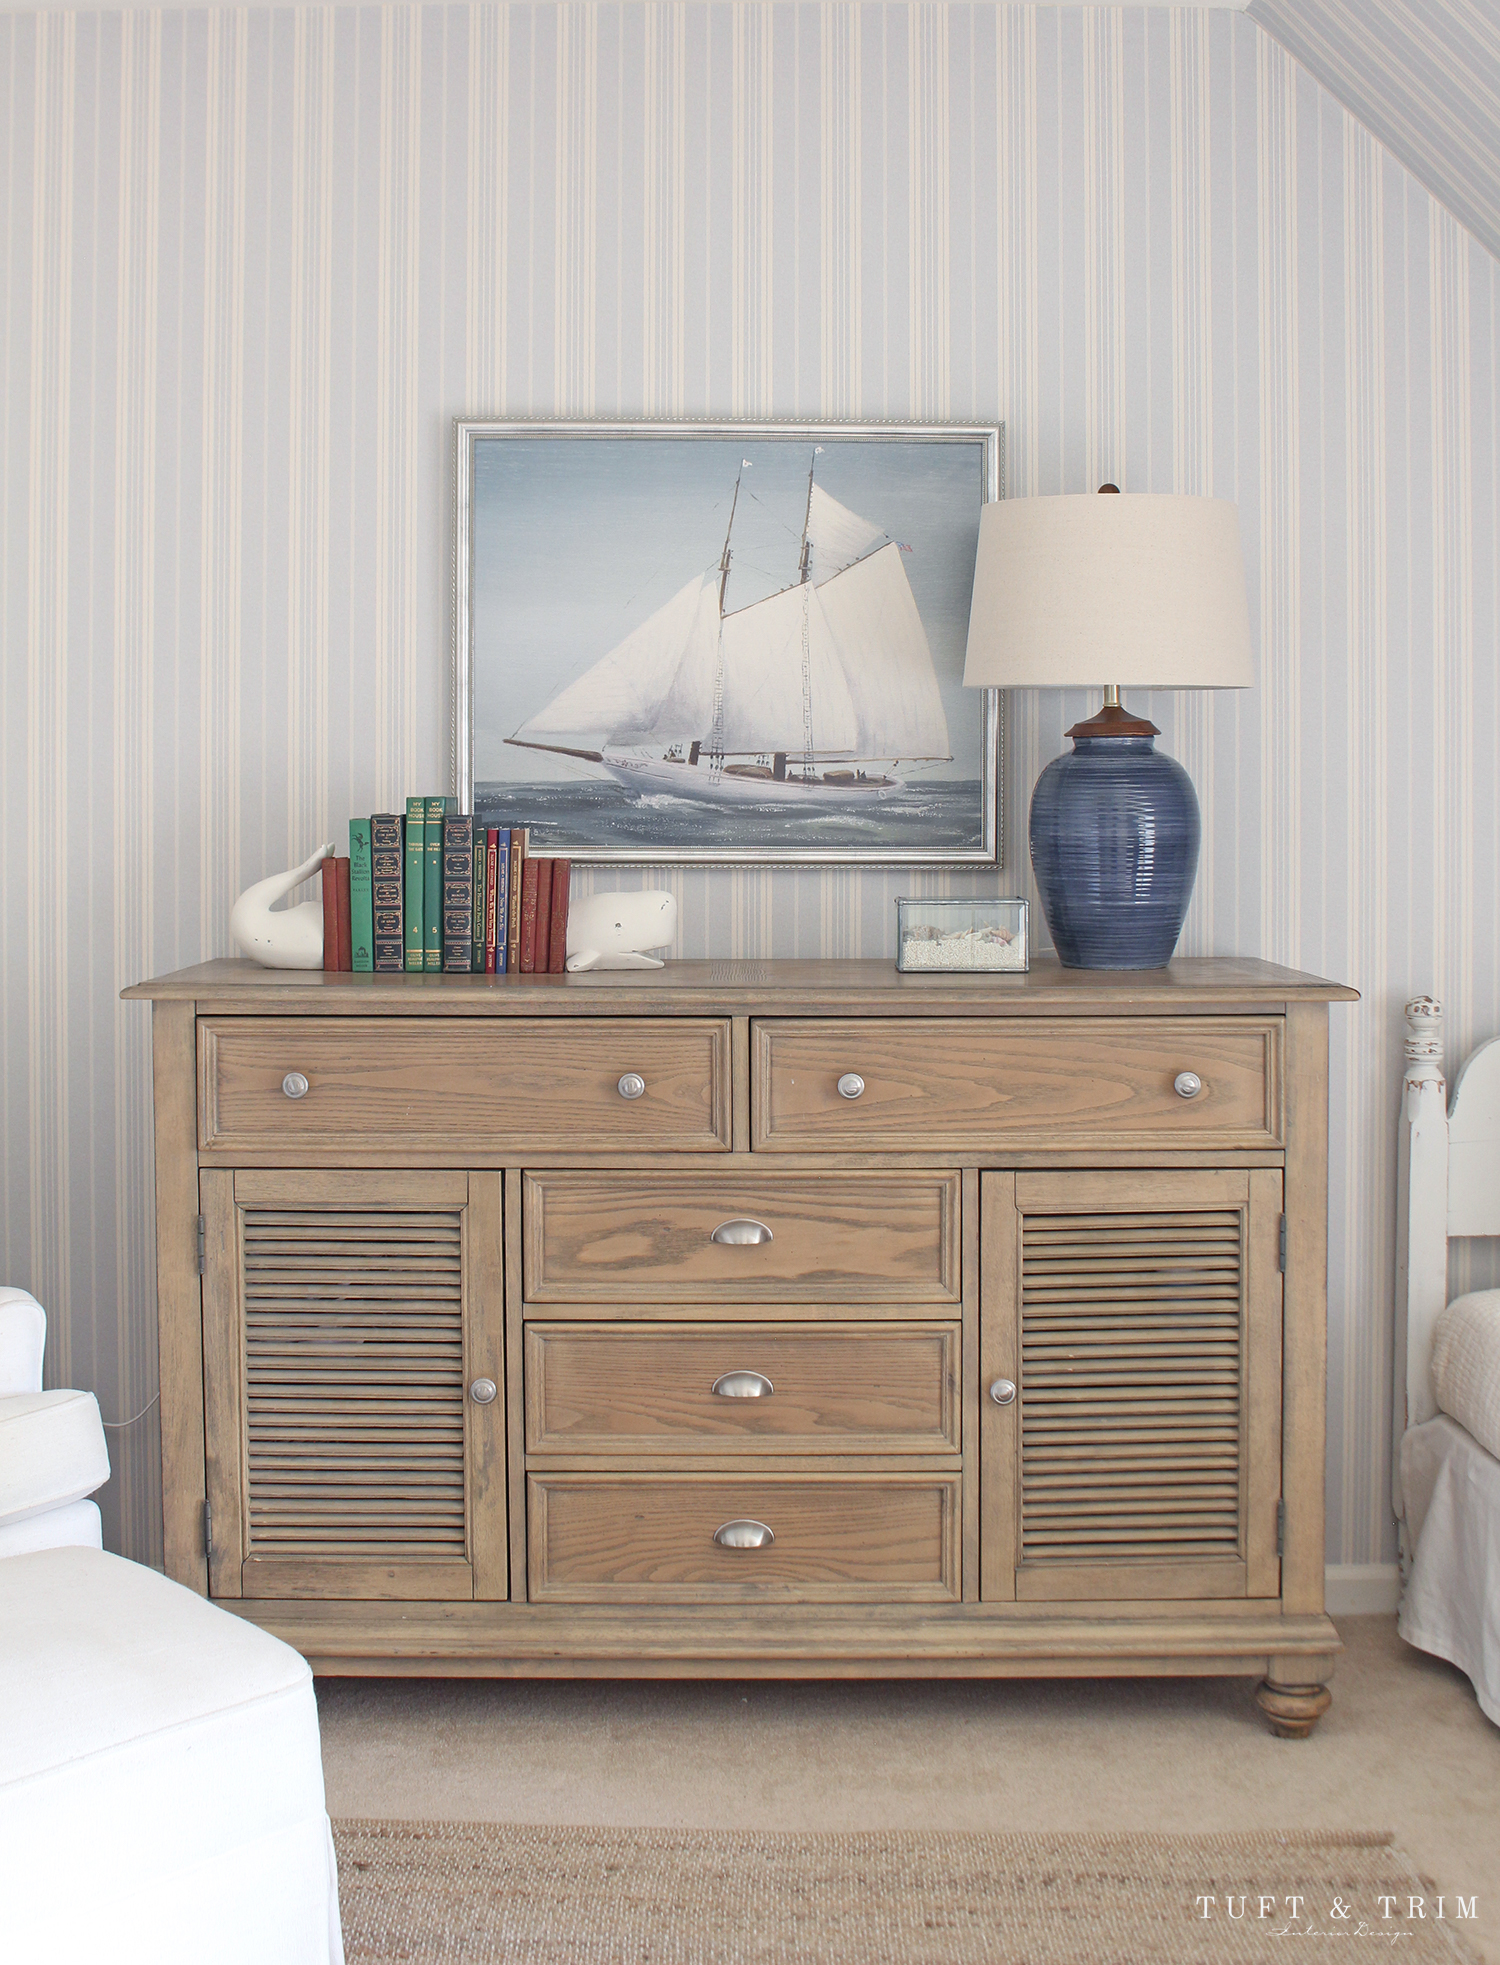 Classic & Timeless Nautical Boys Room with Tuft & Trim Interior Design